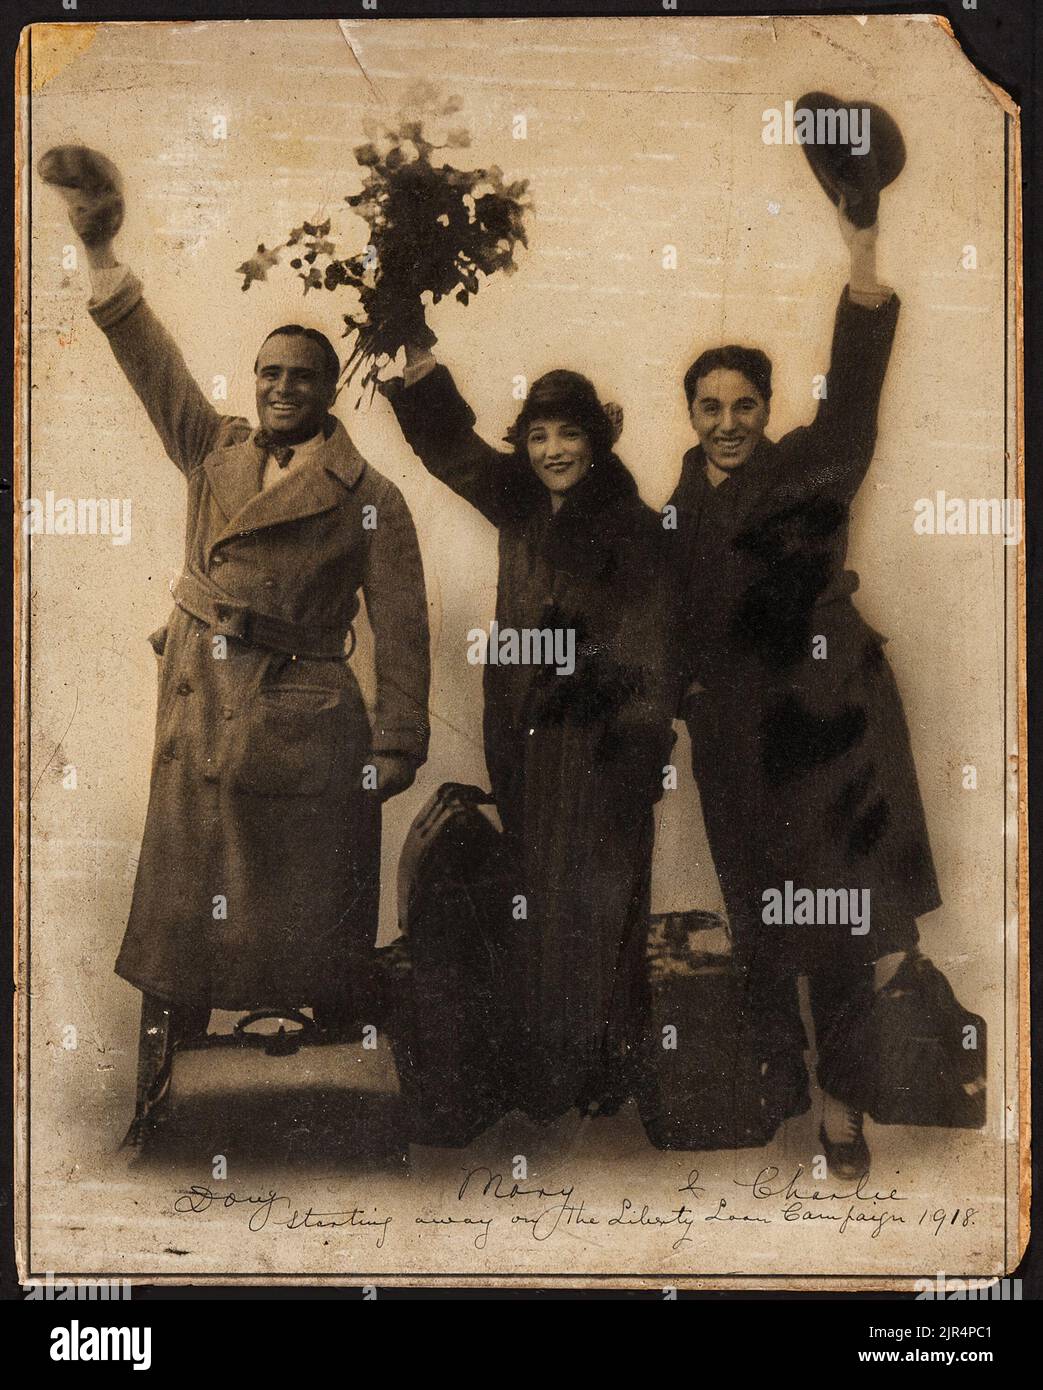 Charlie Chaplin, Douglas Fairbanks, and Mary Pickford (United Artists founders, 1918). Vintage photo of the three film stars. Stock Photo